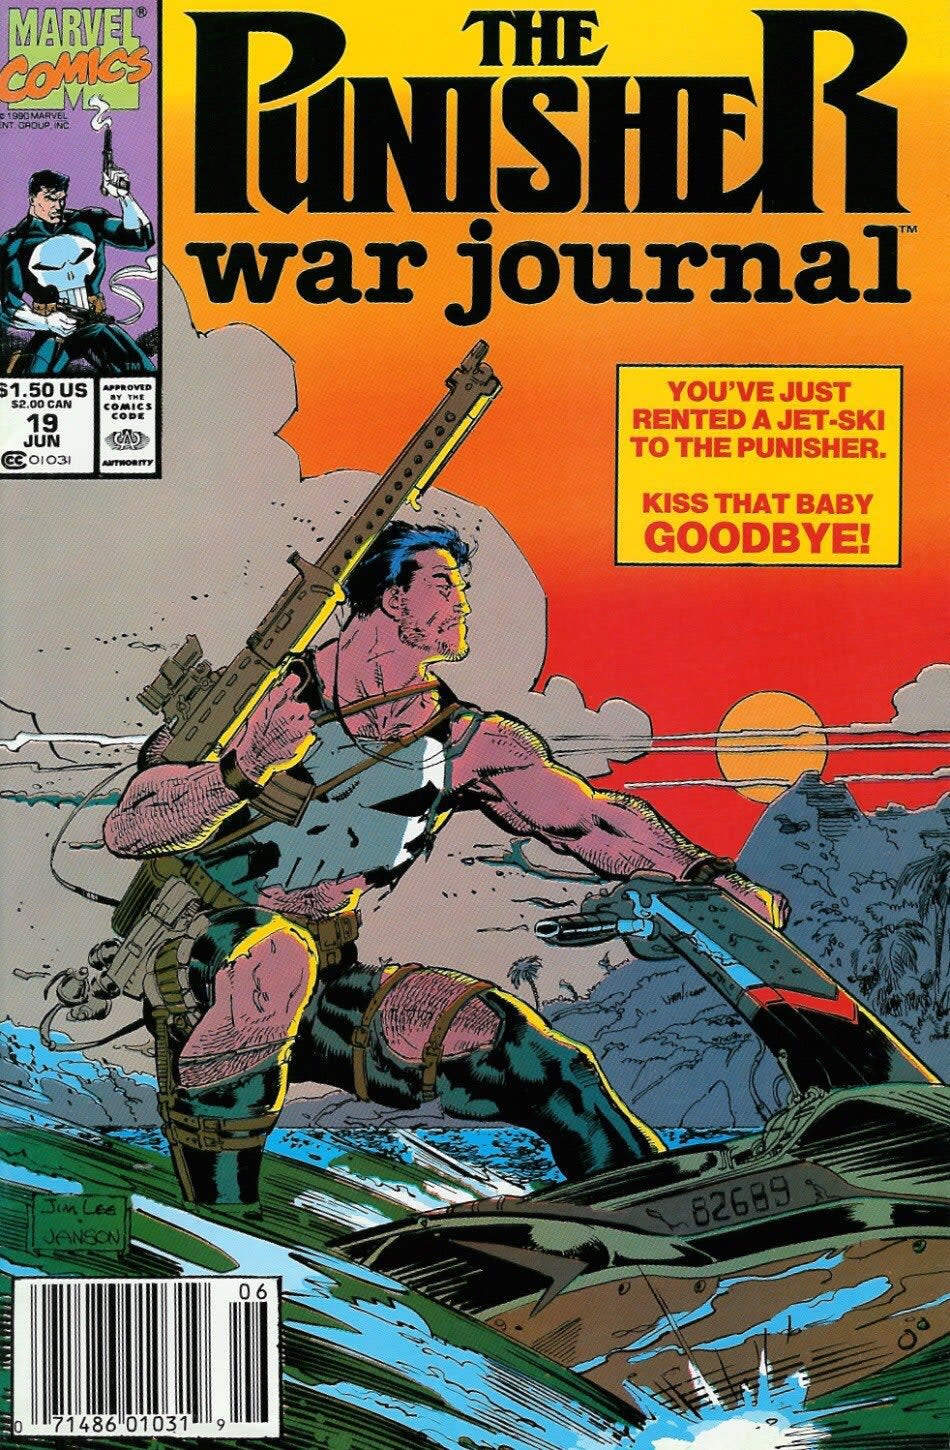 Punisher War Journal Cover shows Punisher on a Jet Ski